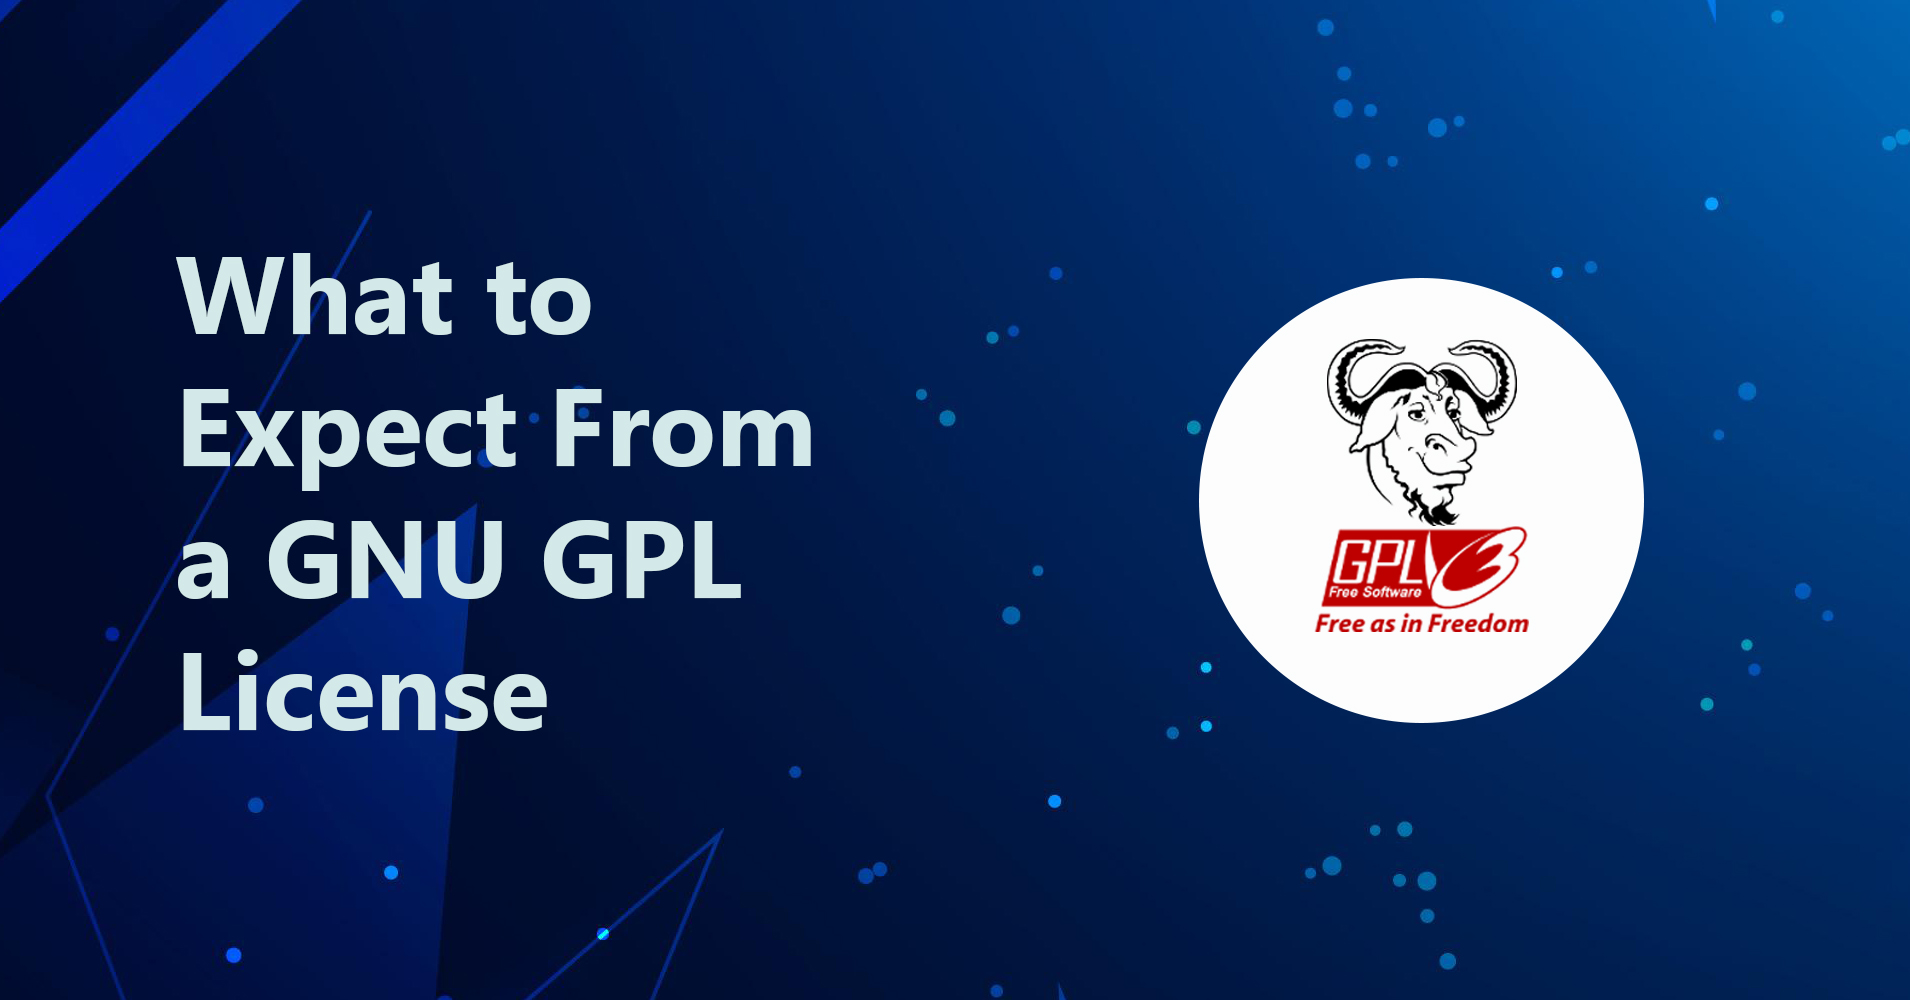 GNU GPL License Featured Image